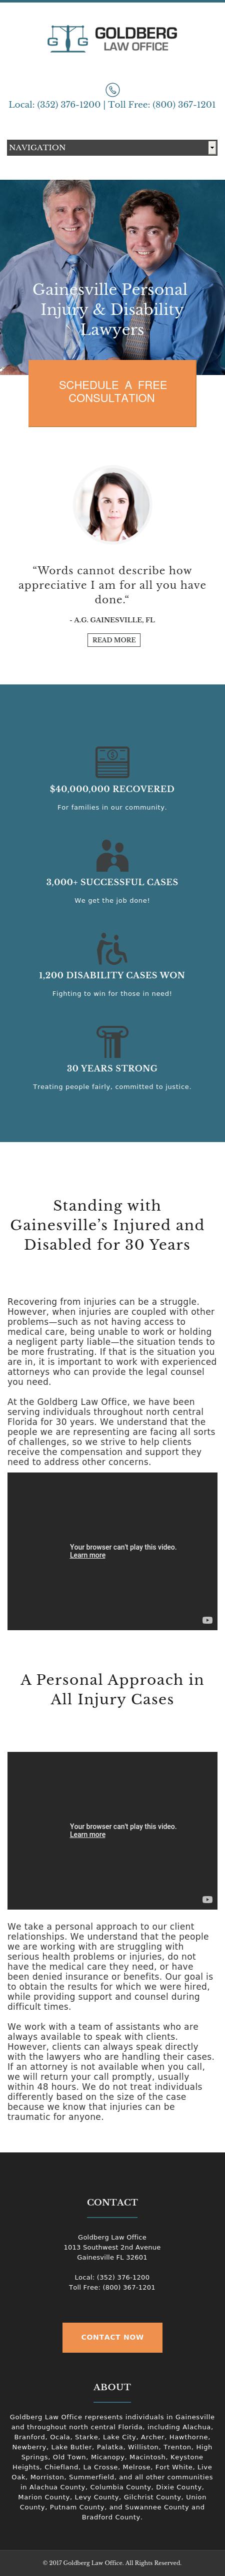 Goldberg Law Office - Gainesville FL Lawyers